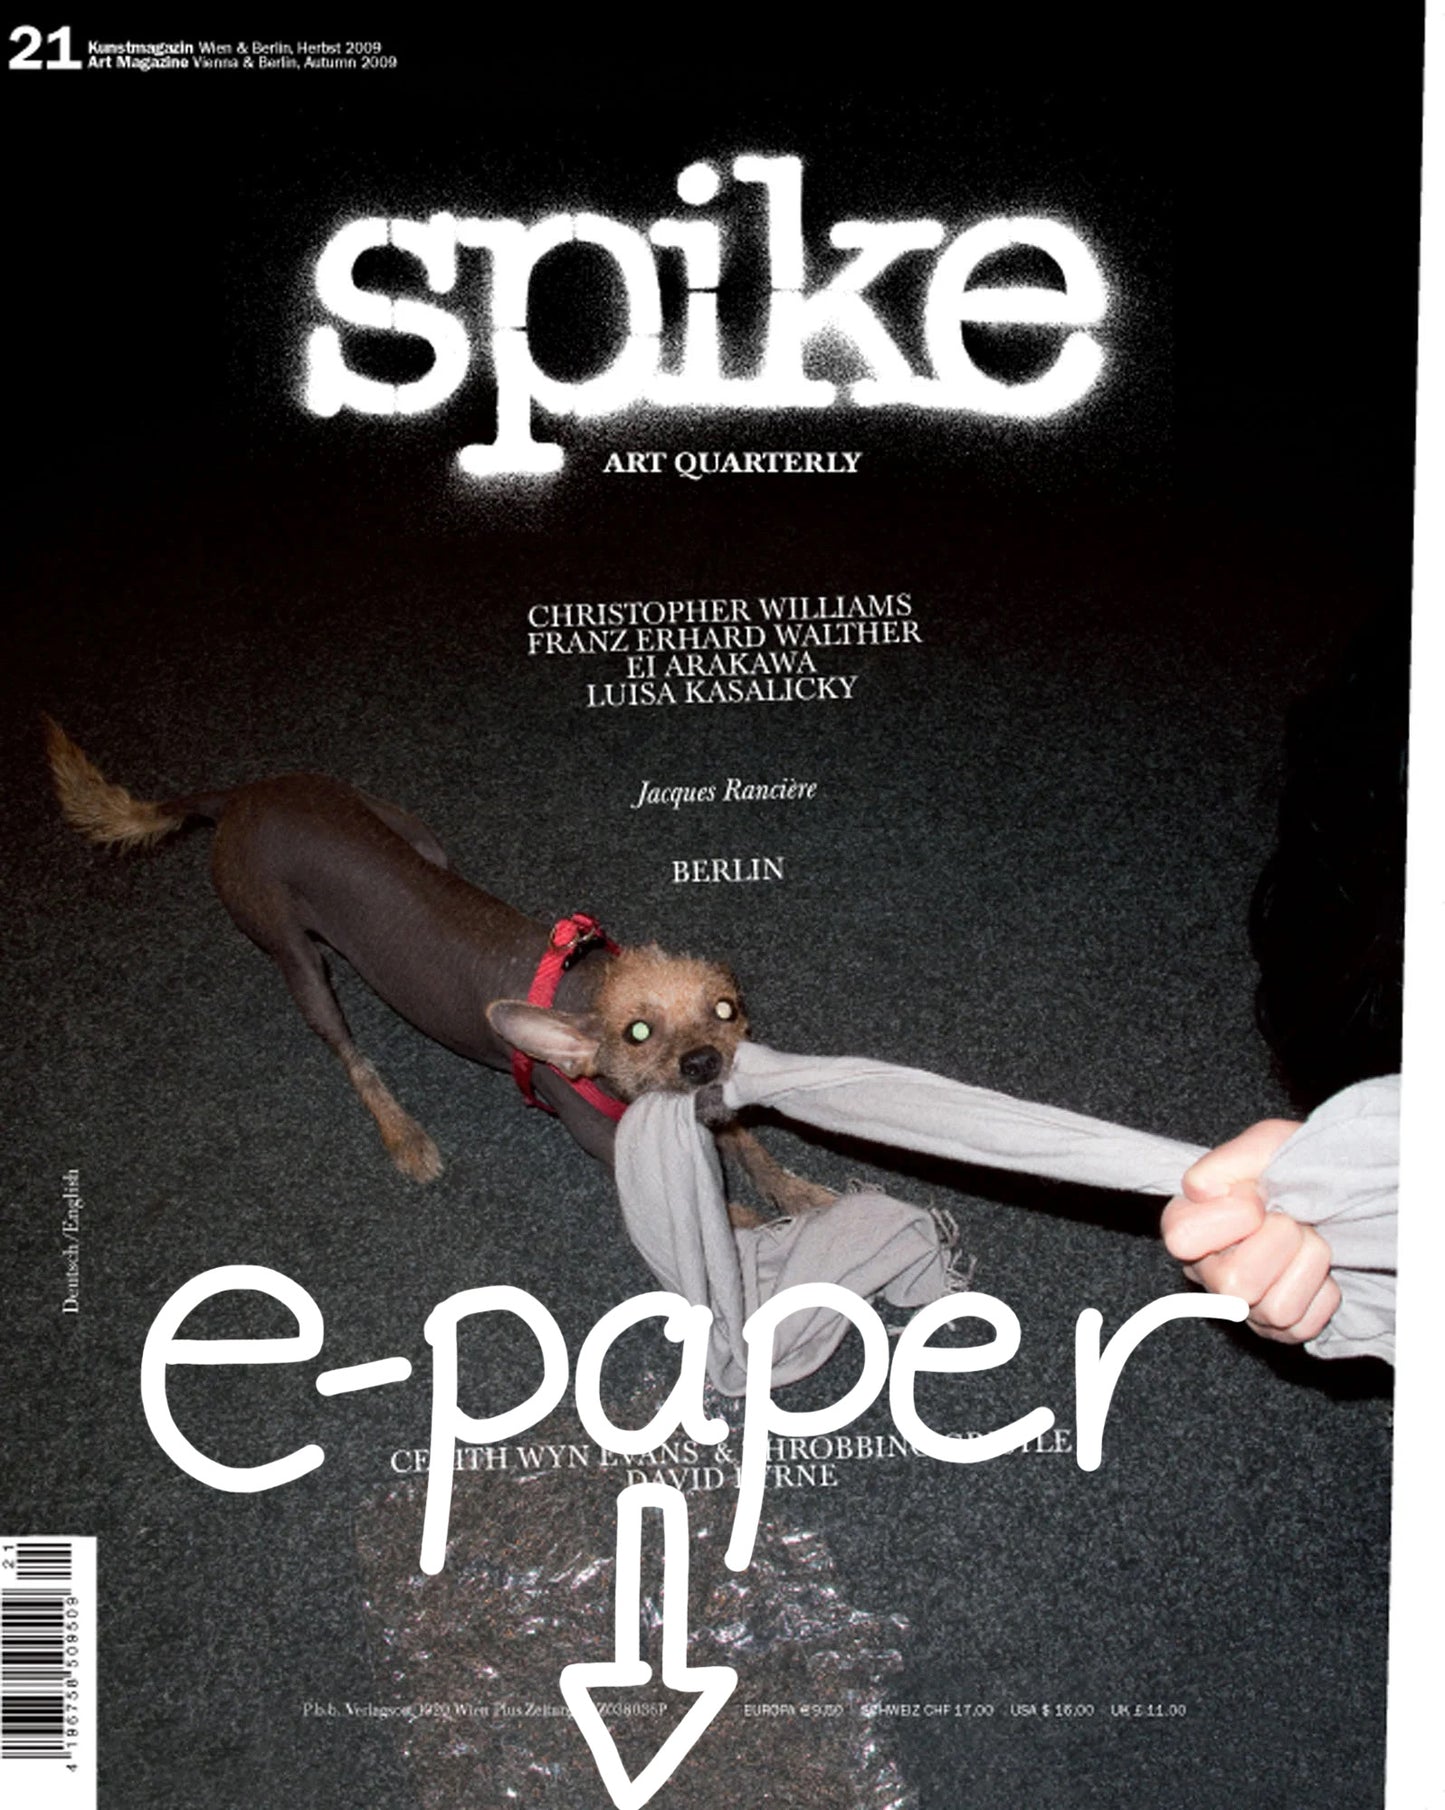 Spike ePaper (Issue 21)